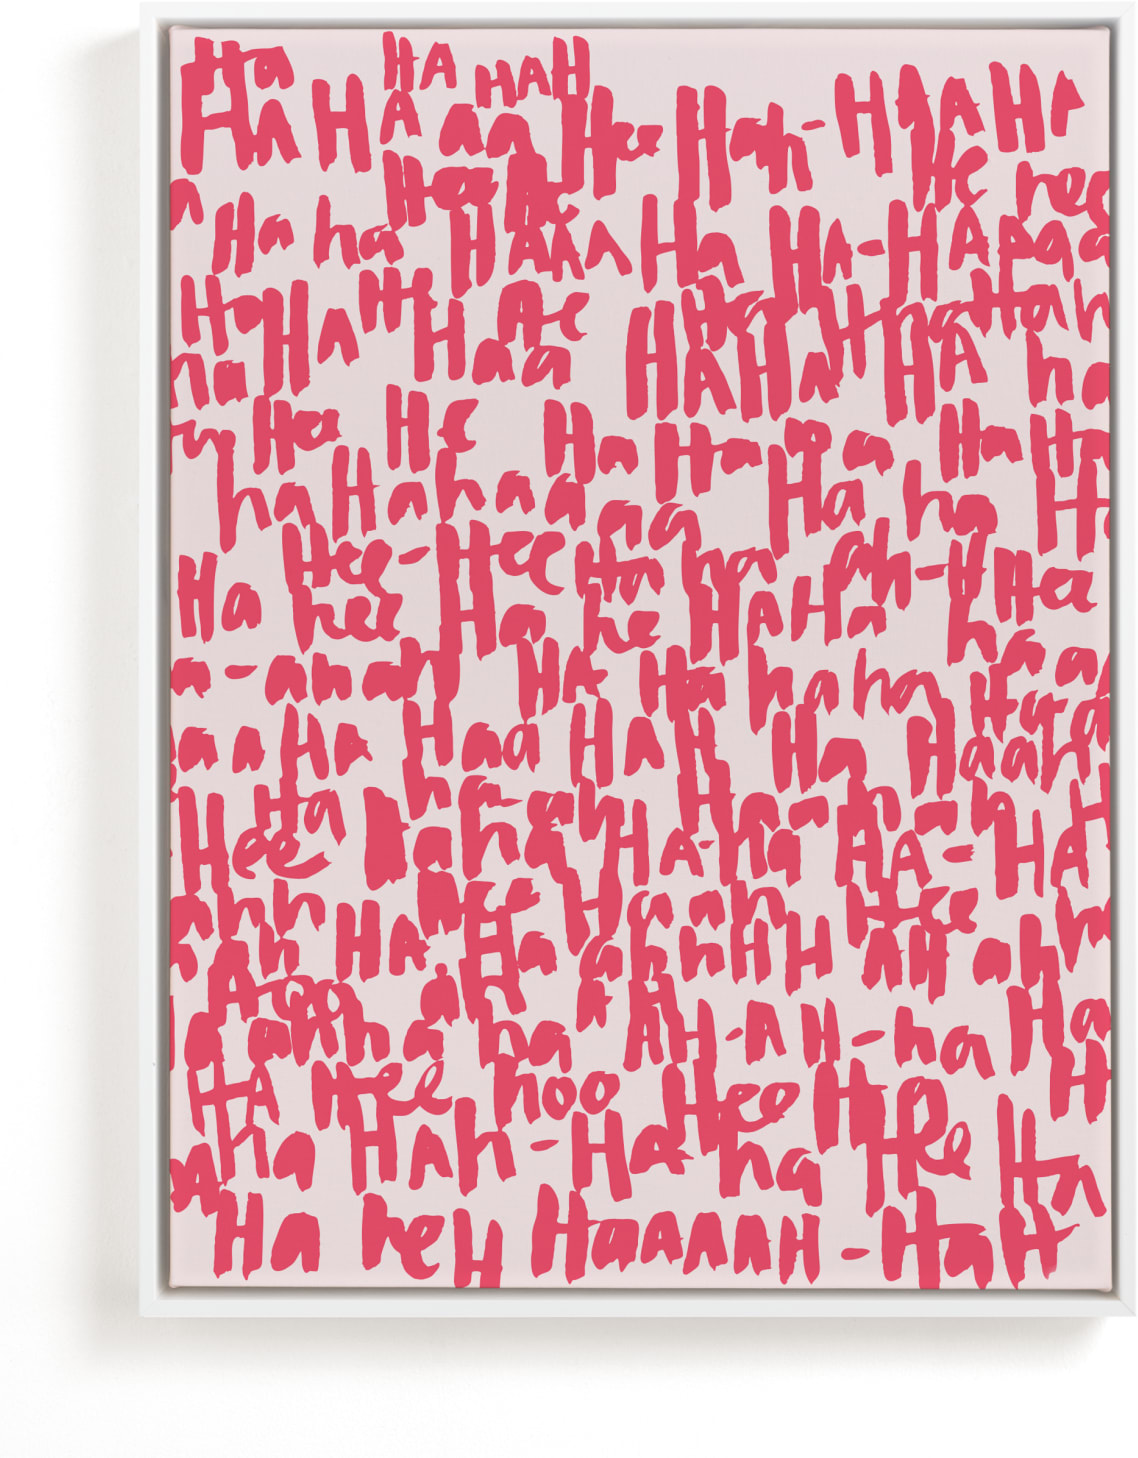 This is a pink art by Kate Roebuck called HA-HA-HA-HA.